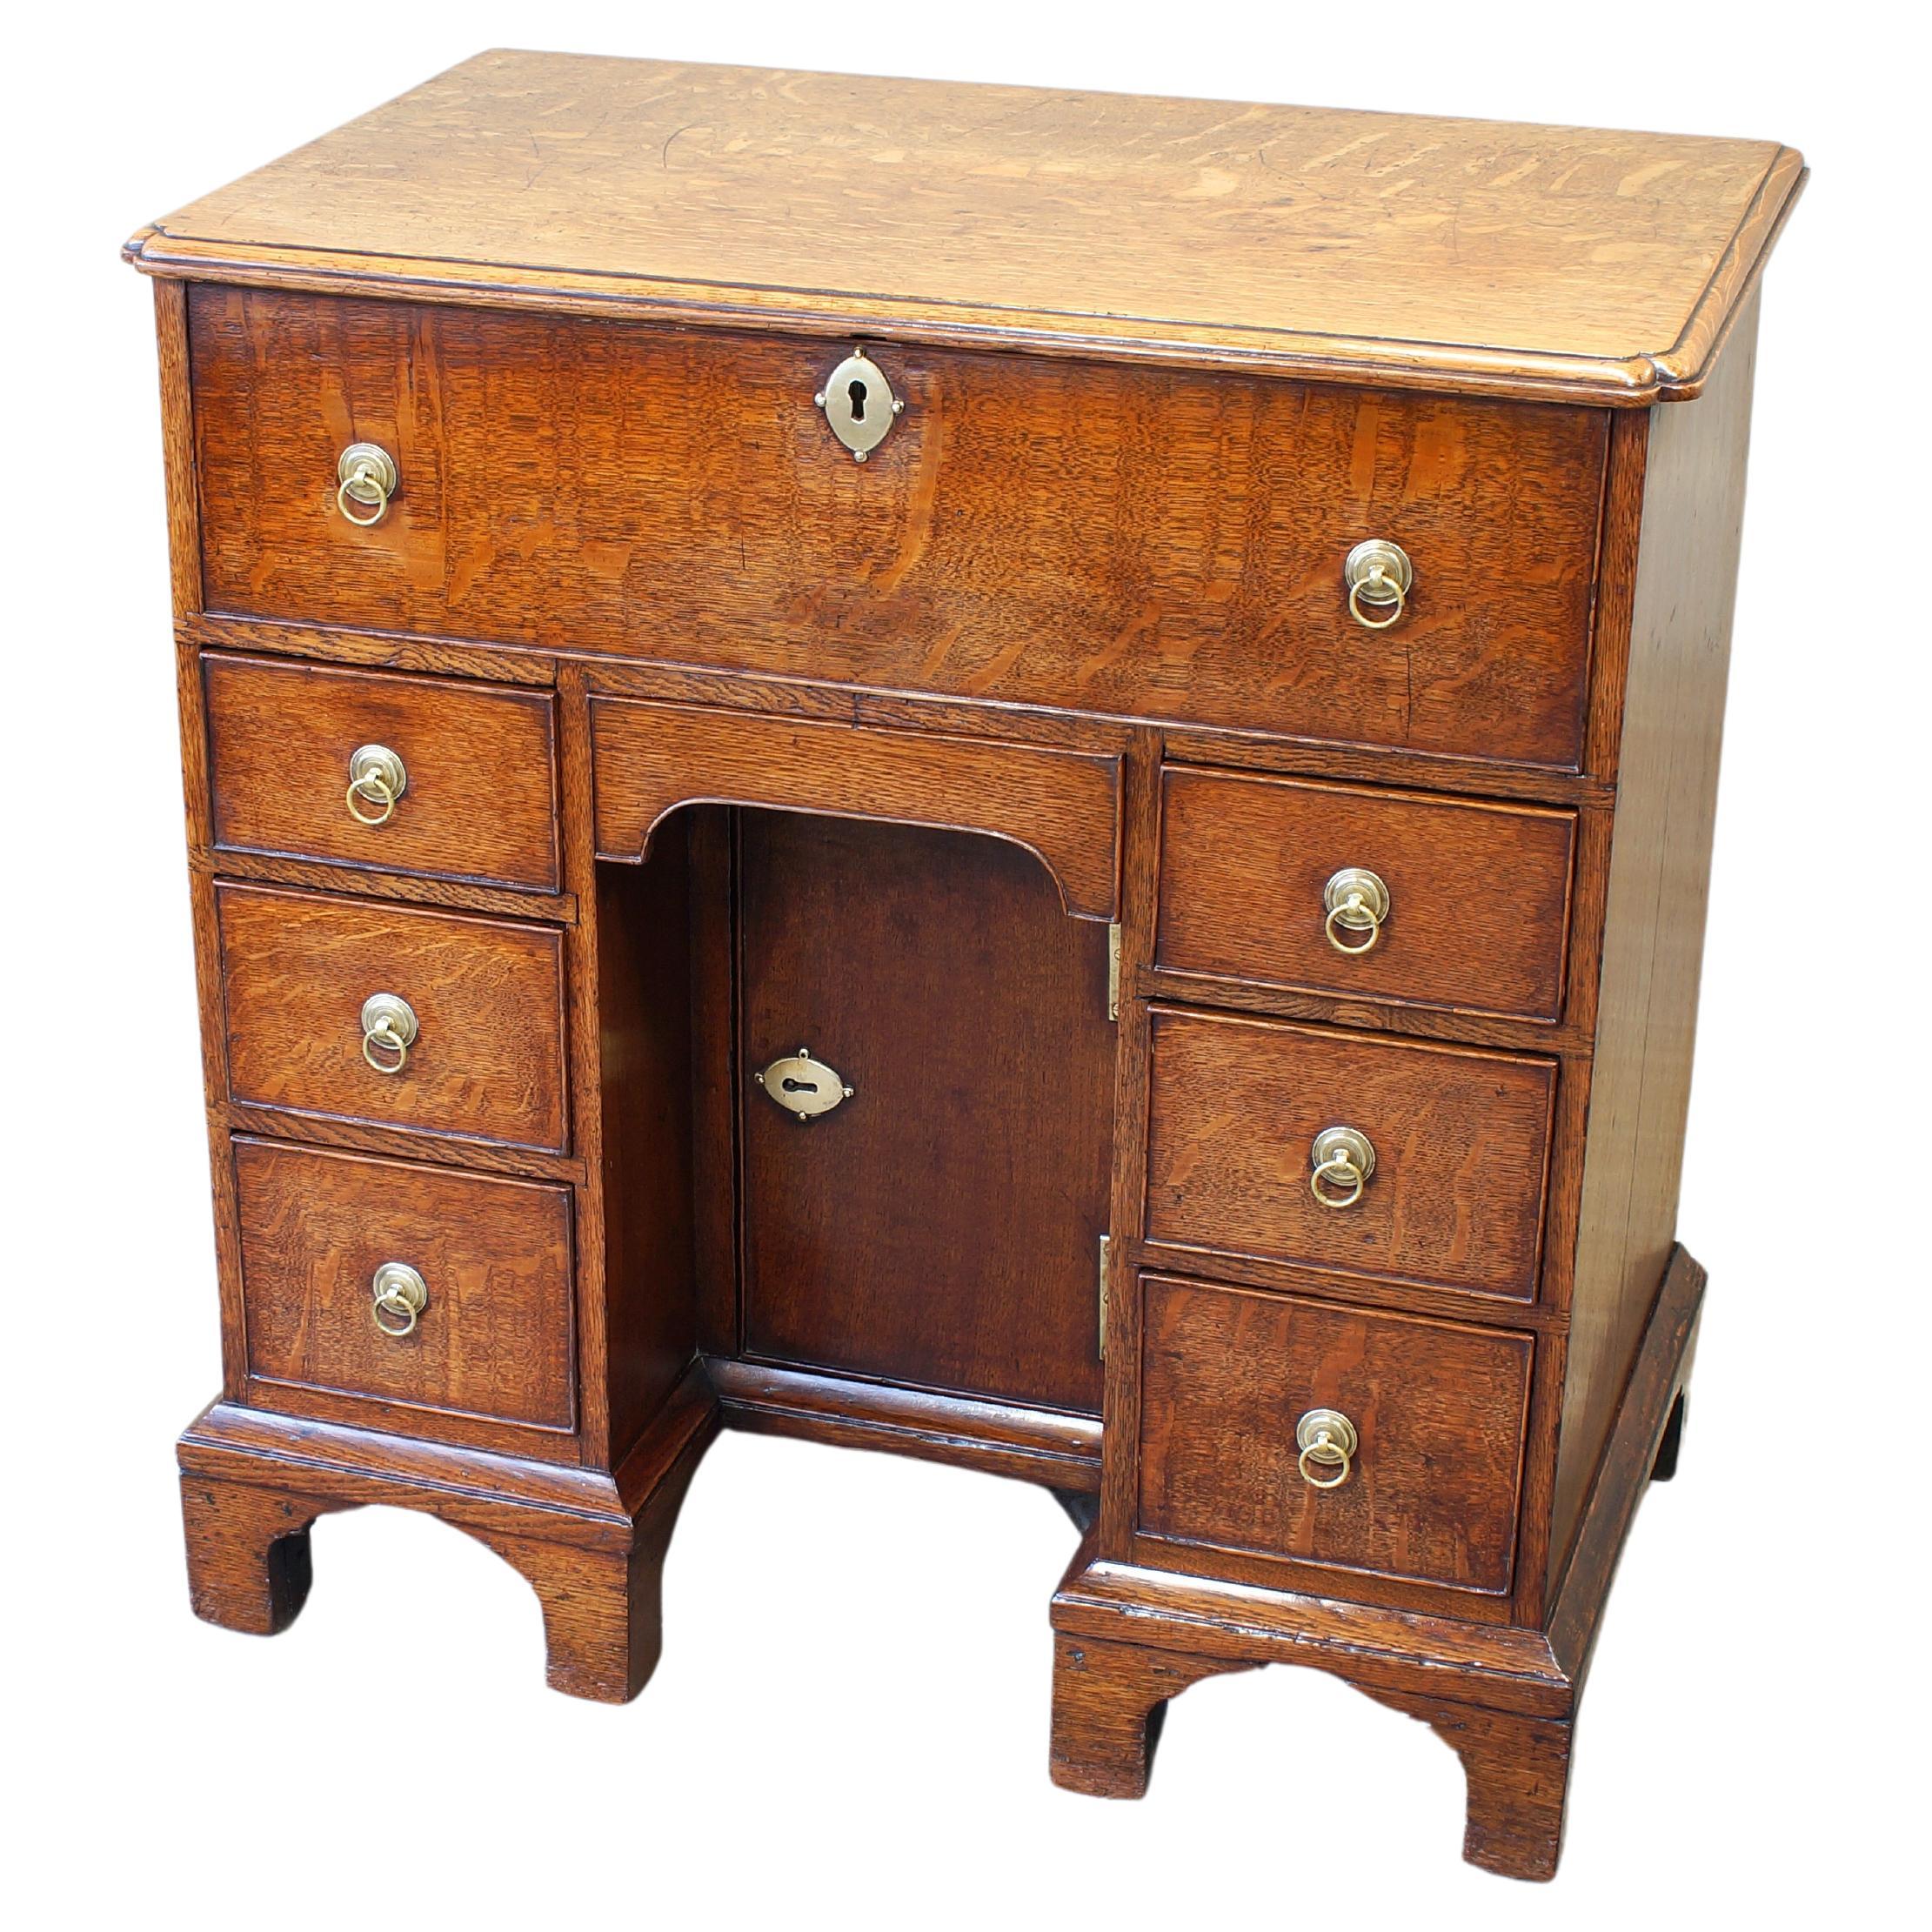  A Small English 18th Century Oak Secretaire Kneehole Desk